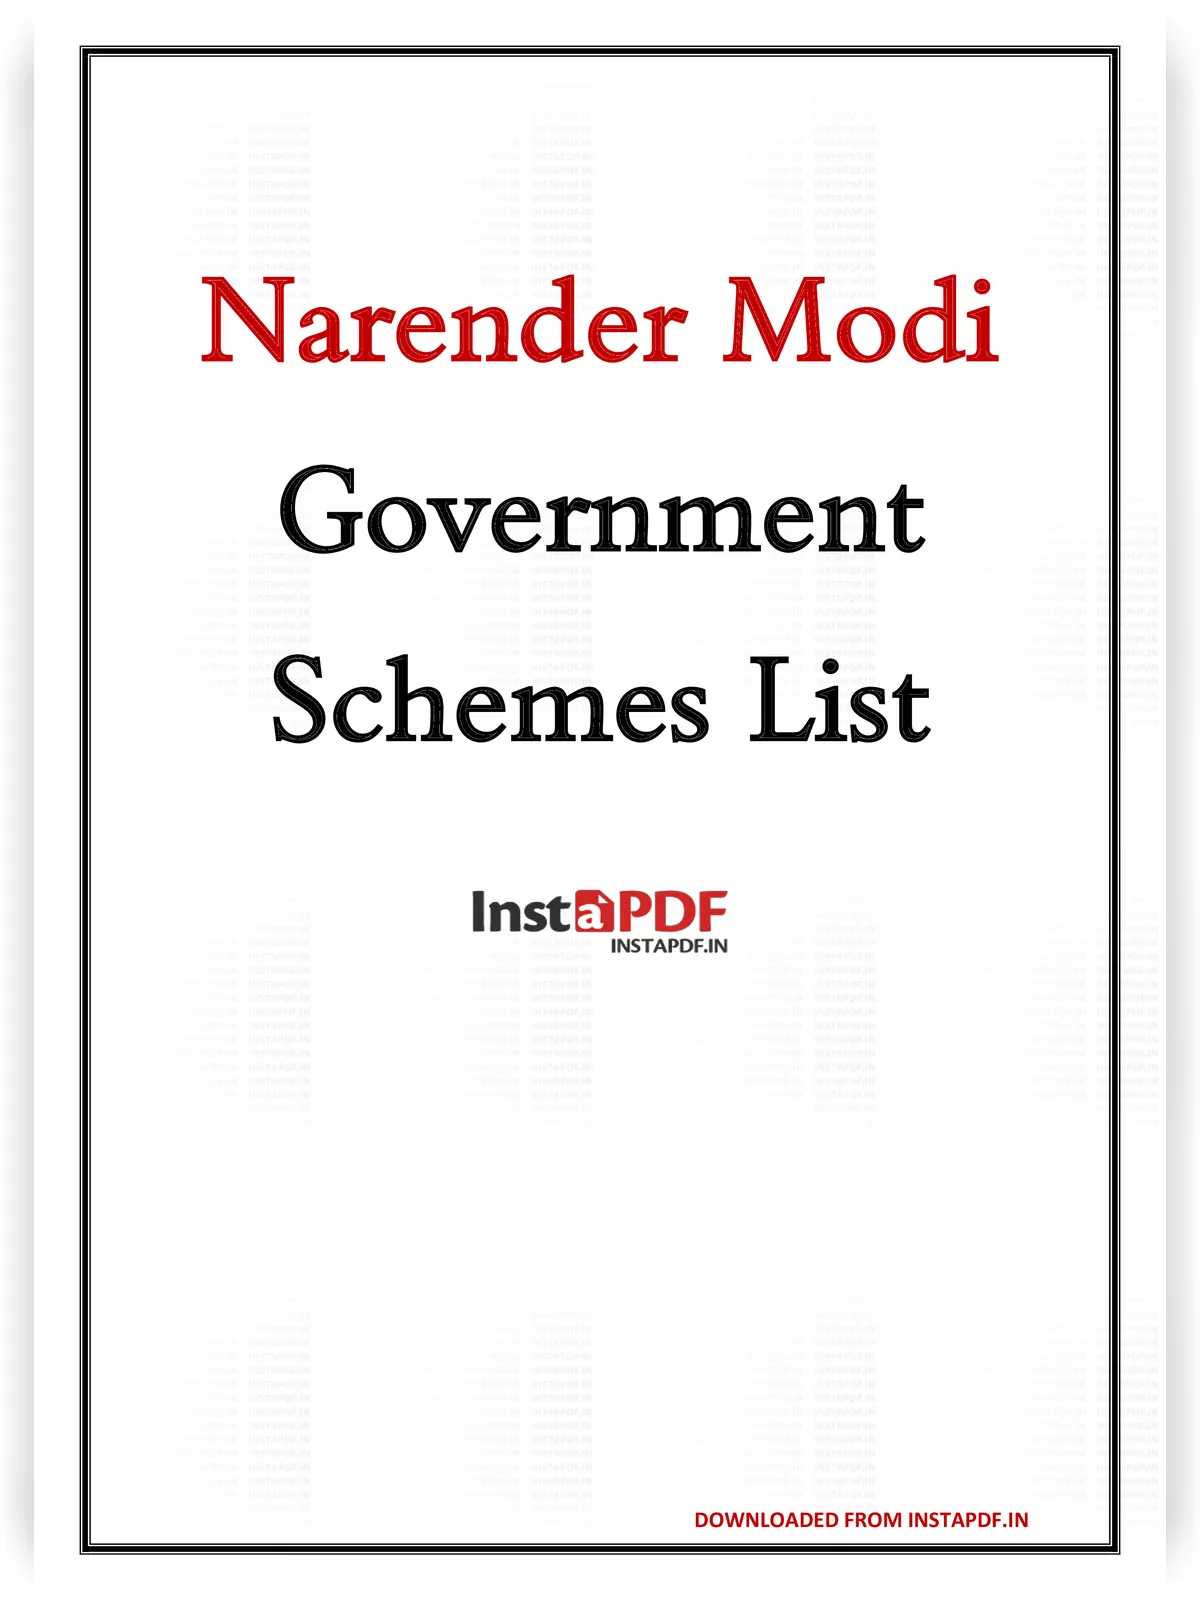 Narendra Modi Government Schemes List